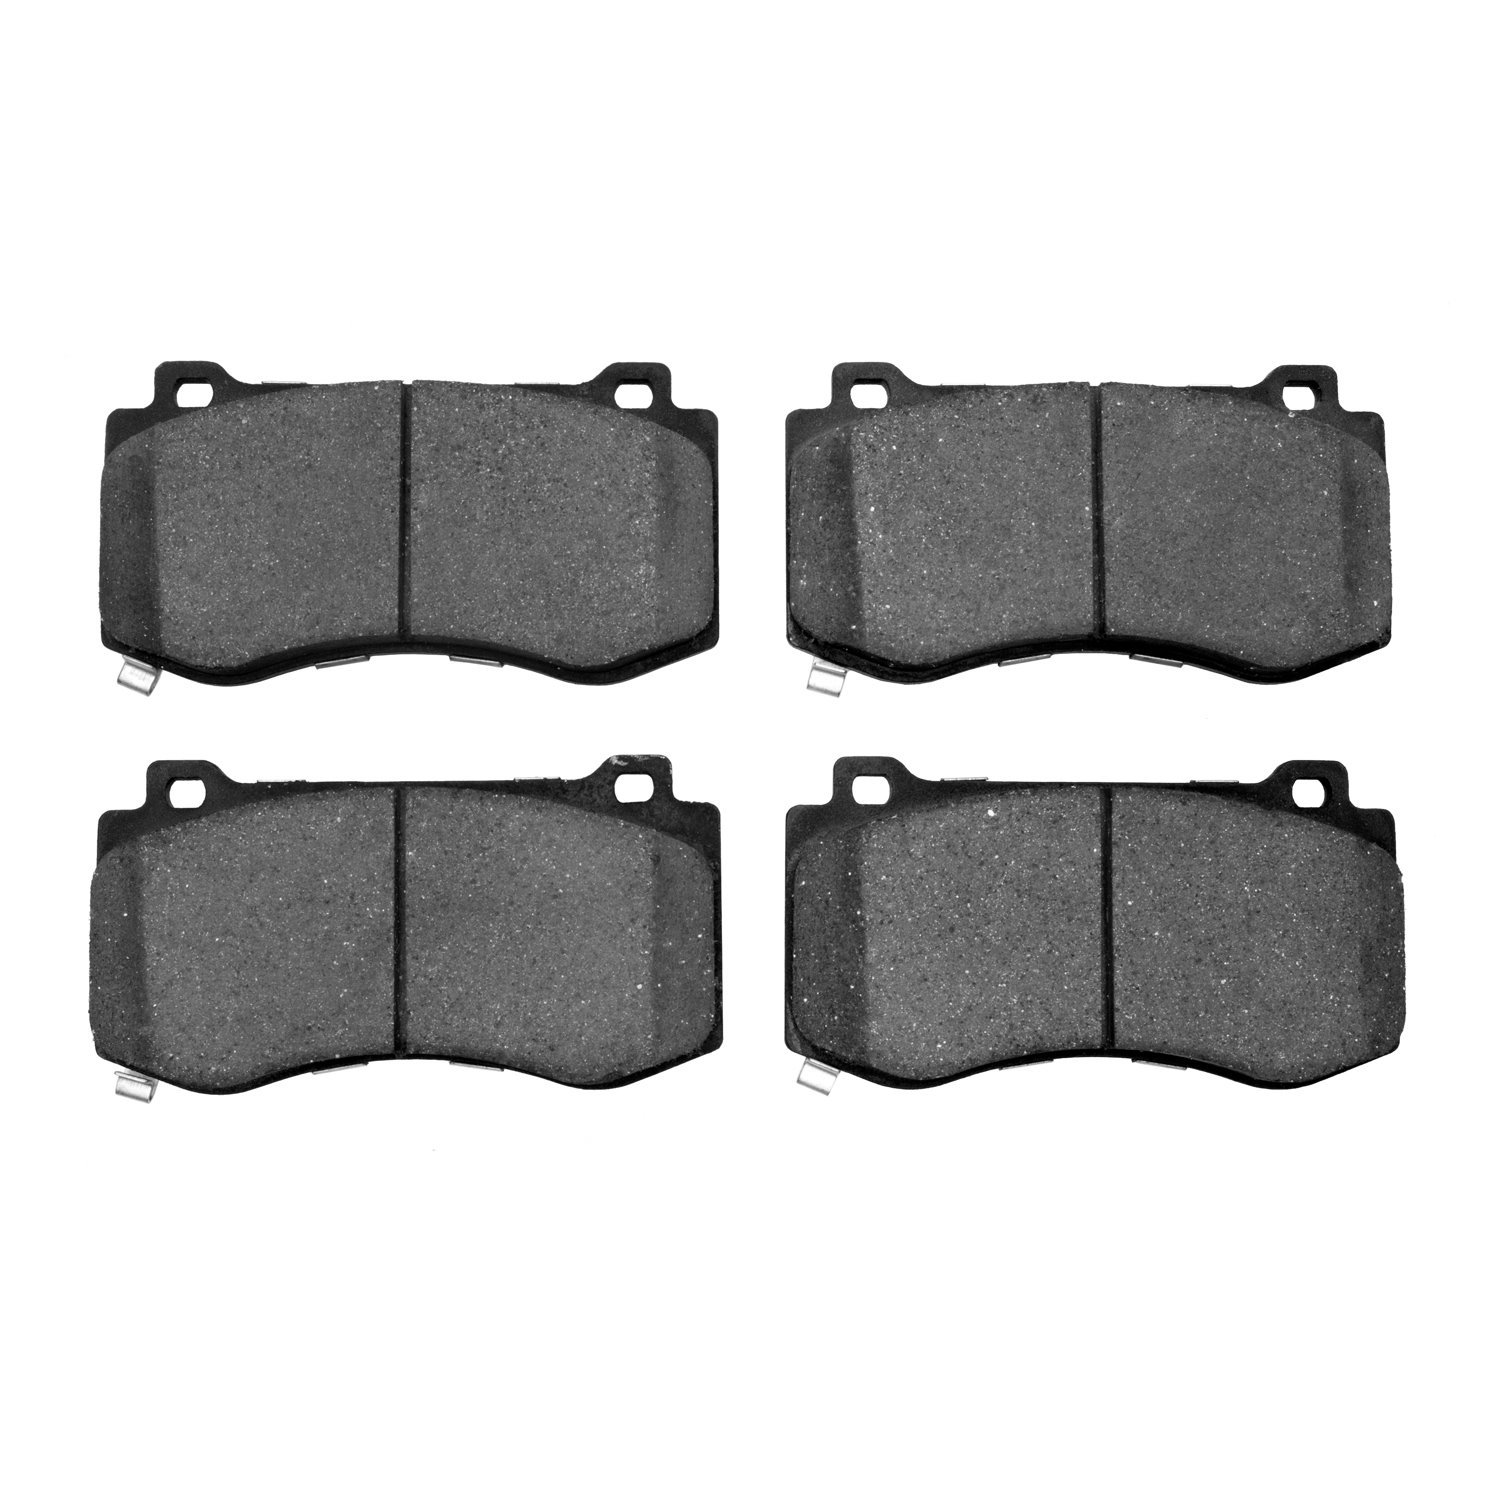 1310-1149-00 3000-Series Ceramic Brake Pads, Fits Select Mopar, Position: Front